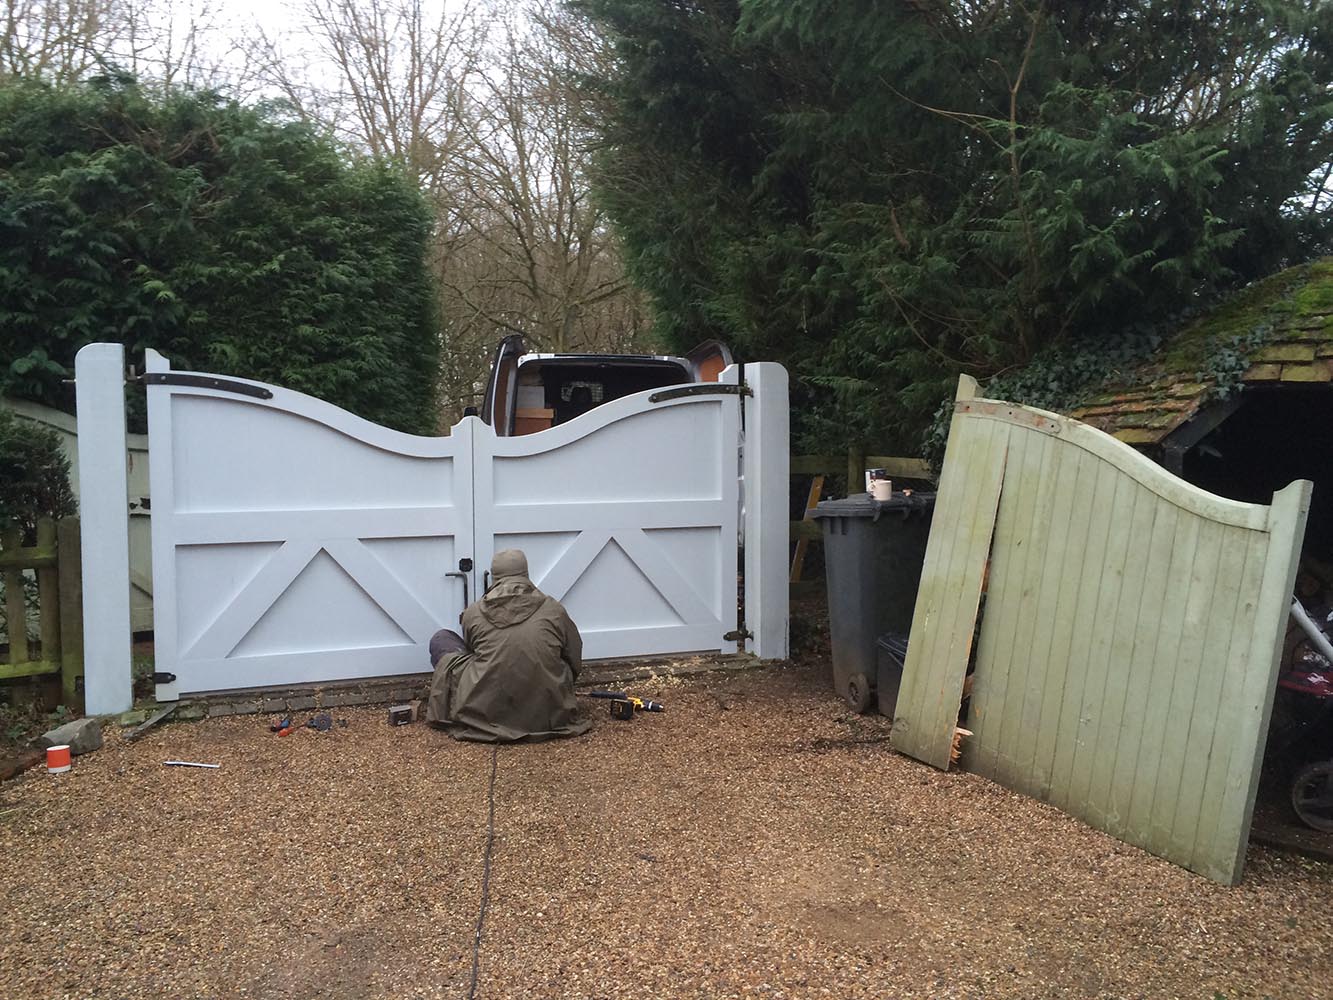 Bespoke driveway gates